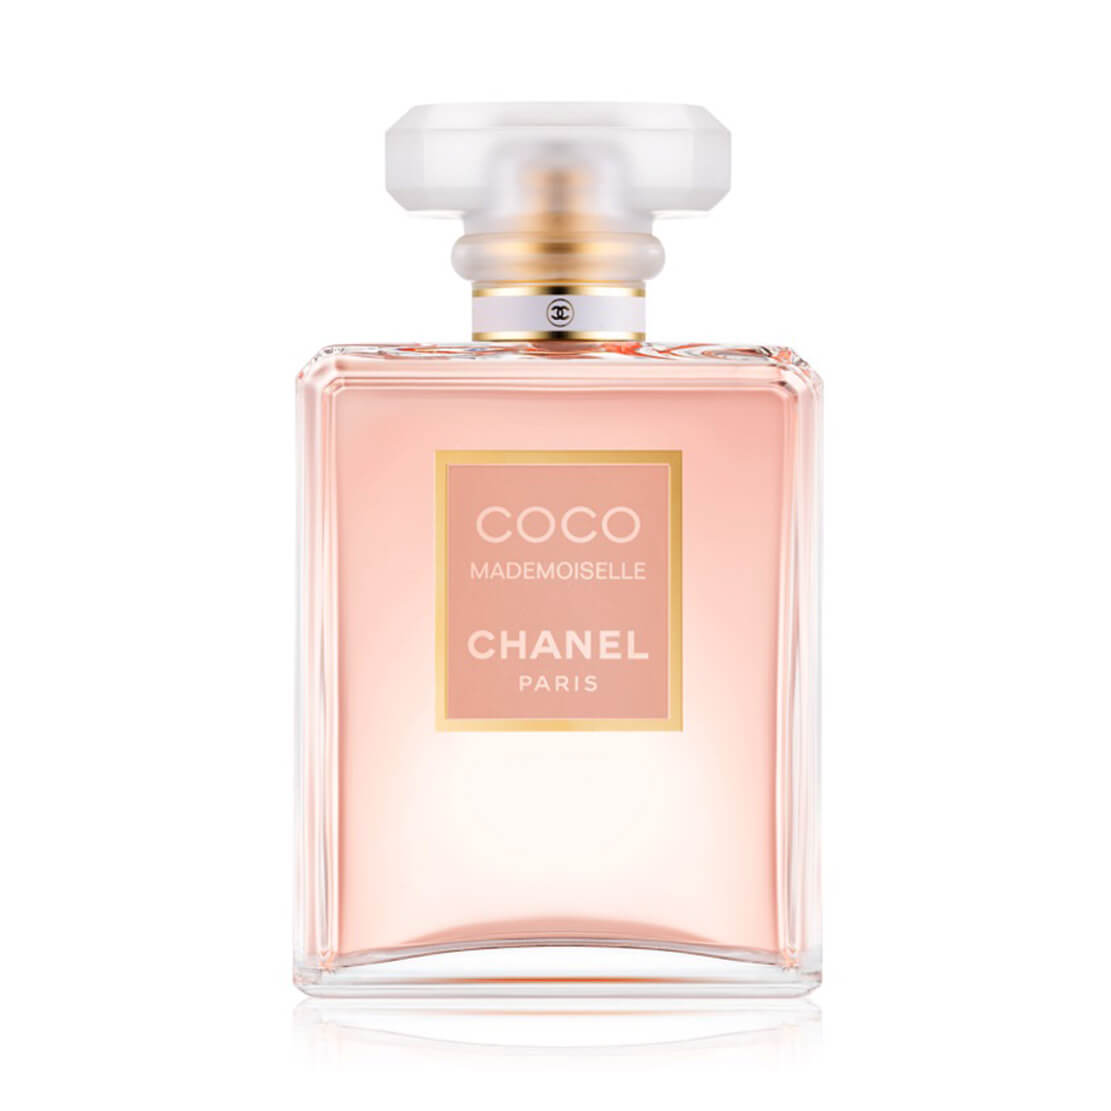 Gardénia by Chanel (Eau de Parfum) » Reviews & Perfume Facts